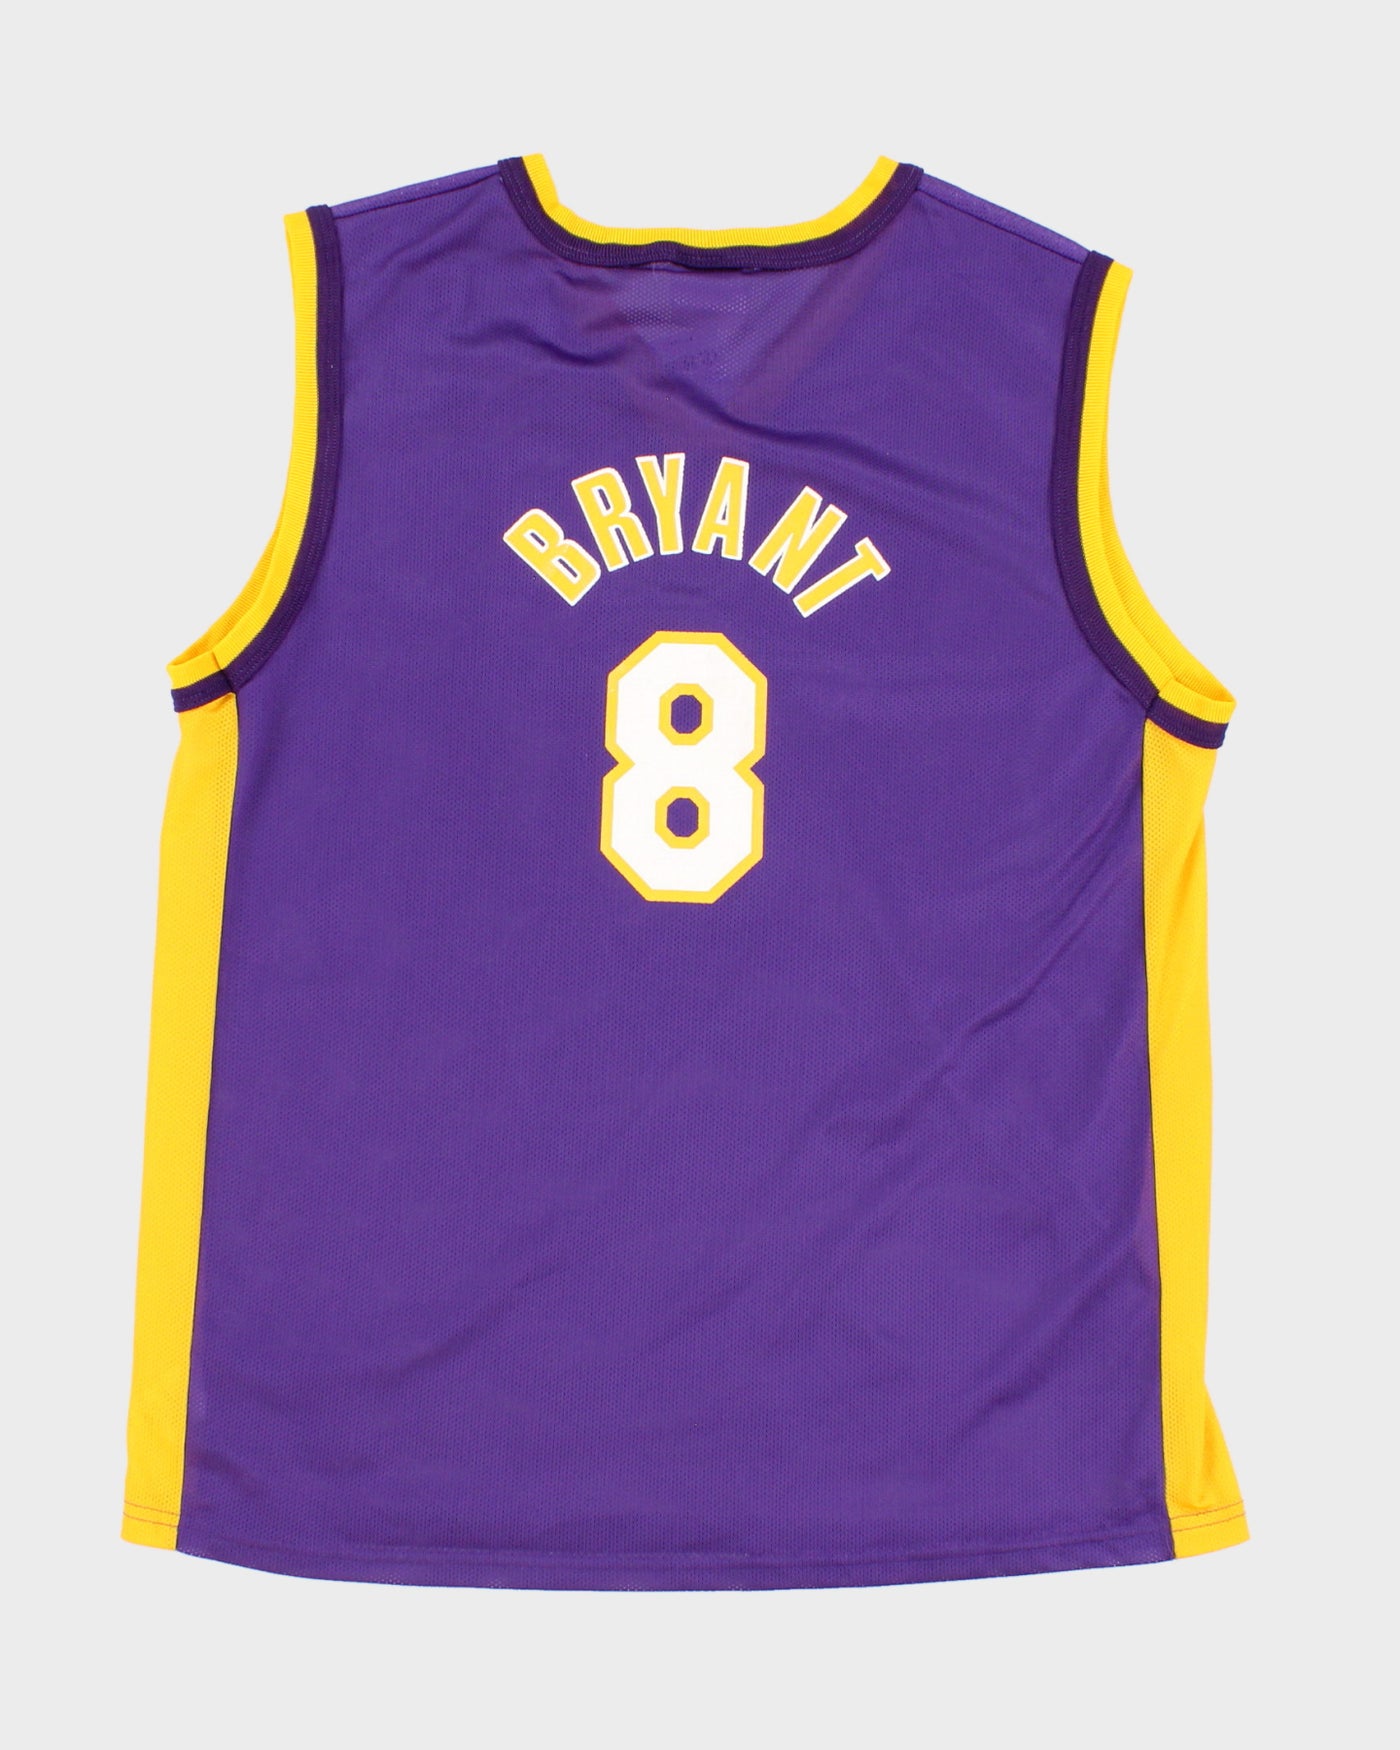 Lot - SIGNED Kobe Bryant Los Angeles Lakers #8 NBA Reebok Jersey